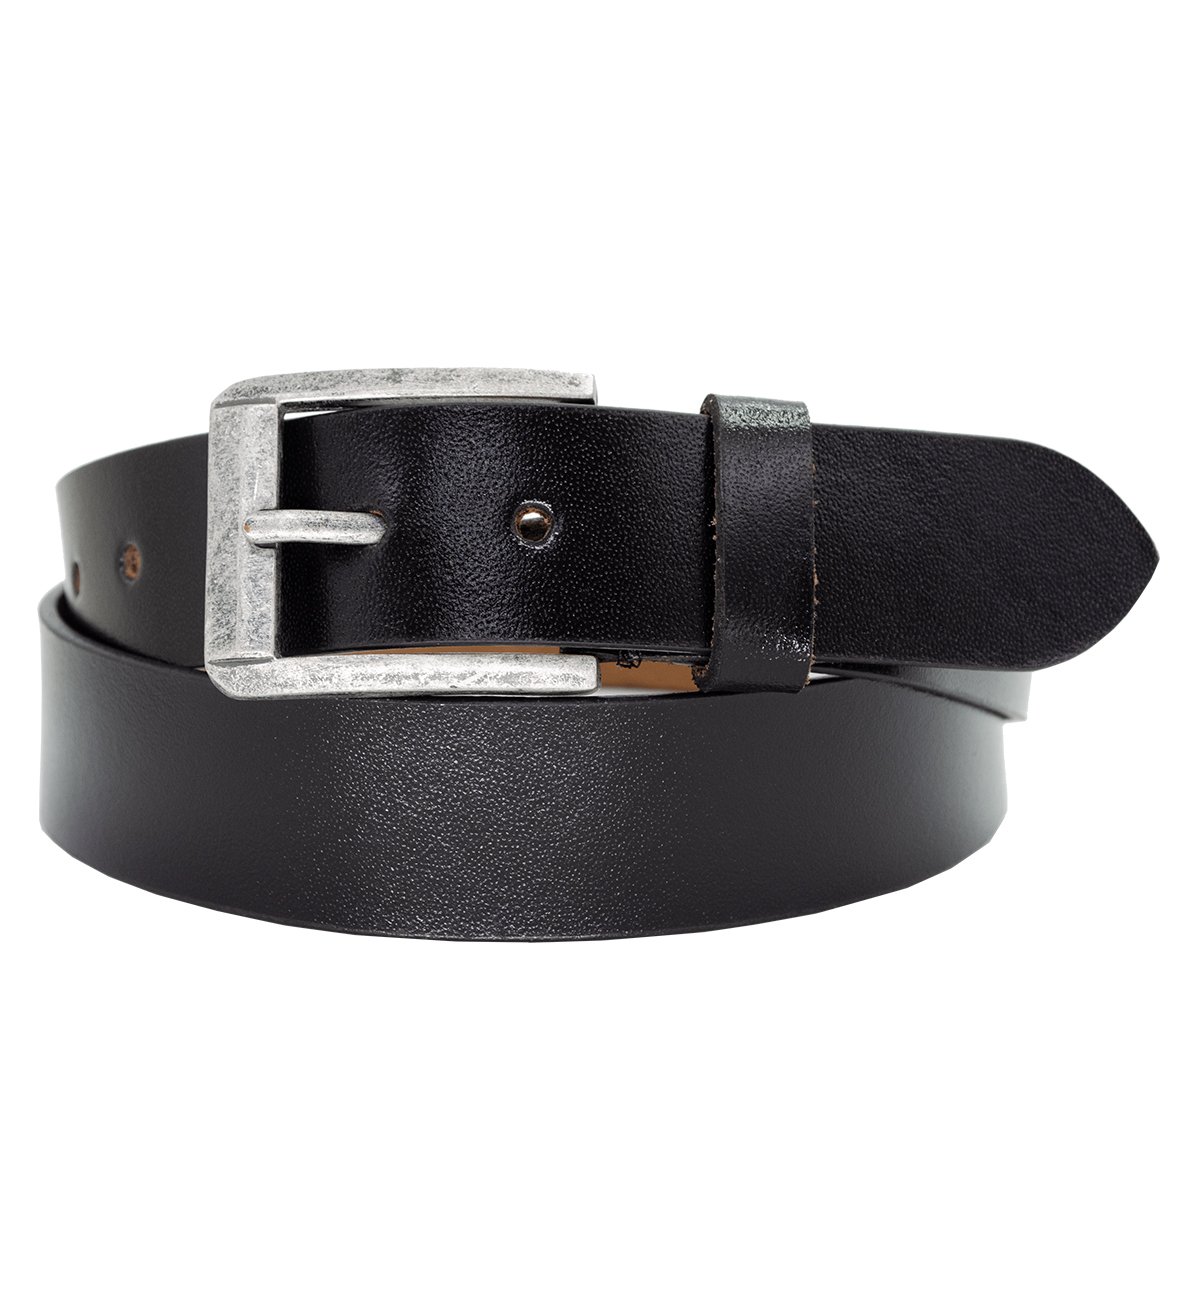 MACHO - Men's Genuine Leather Belt with Heavy Antique Buckle - #BT-813